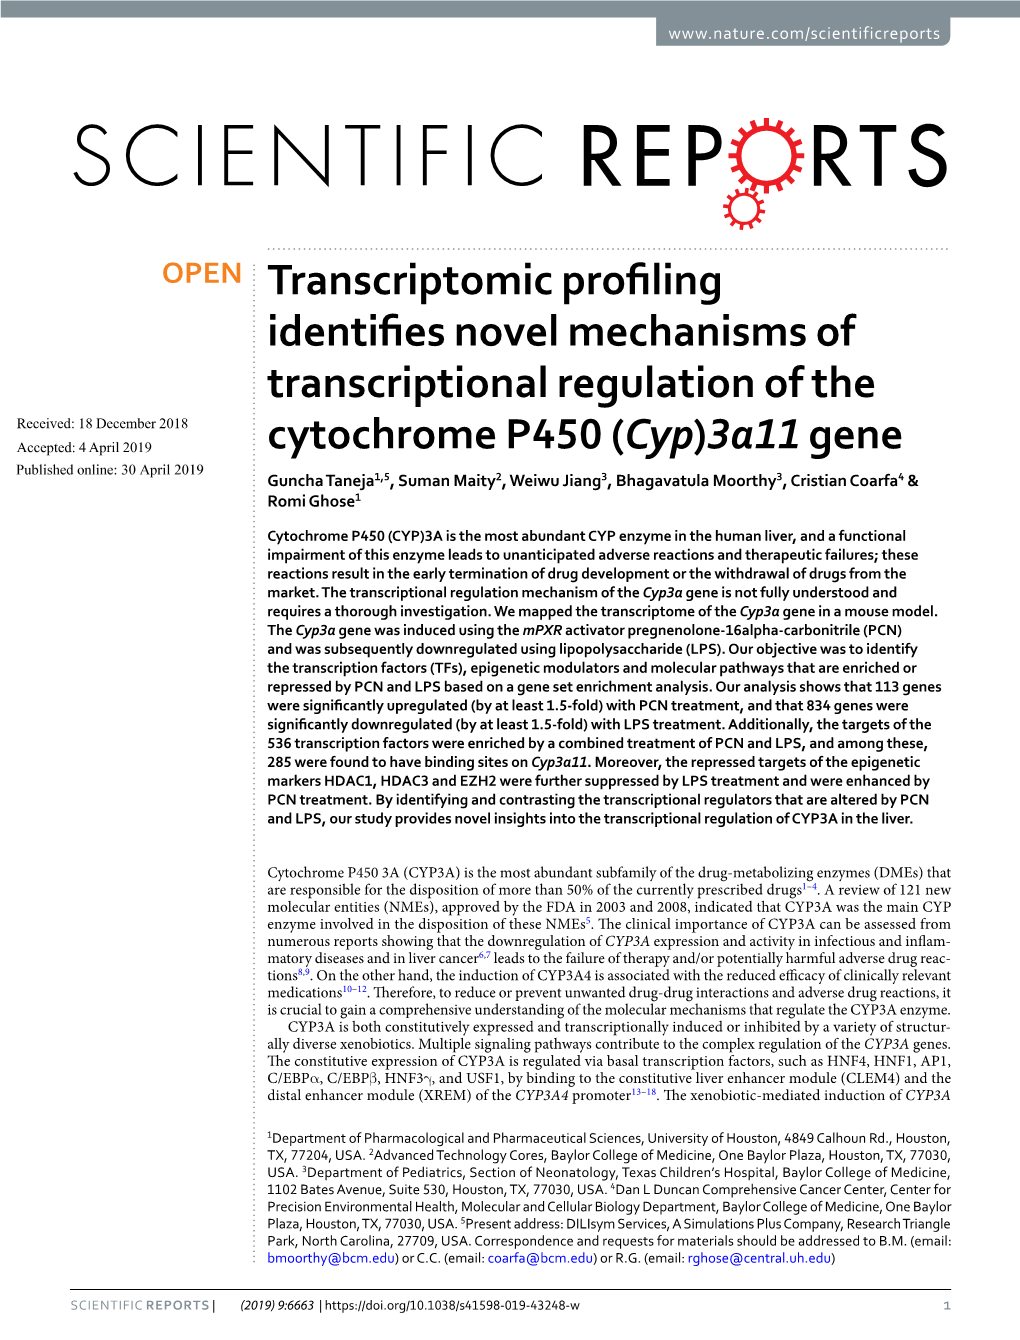 Transcriptomic Profiling Identifies Novel Mechanisms of Transcriptional